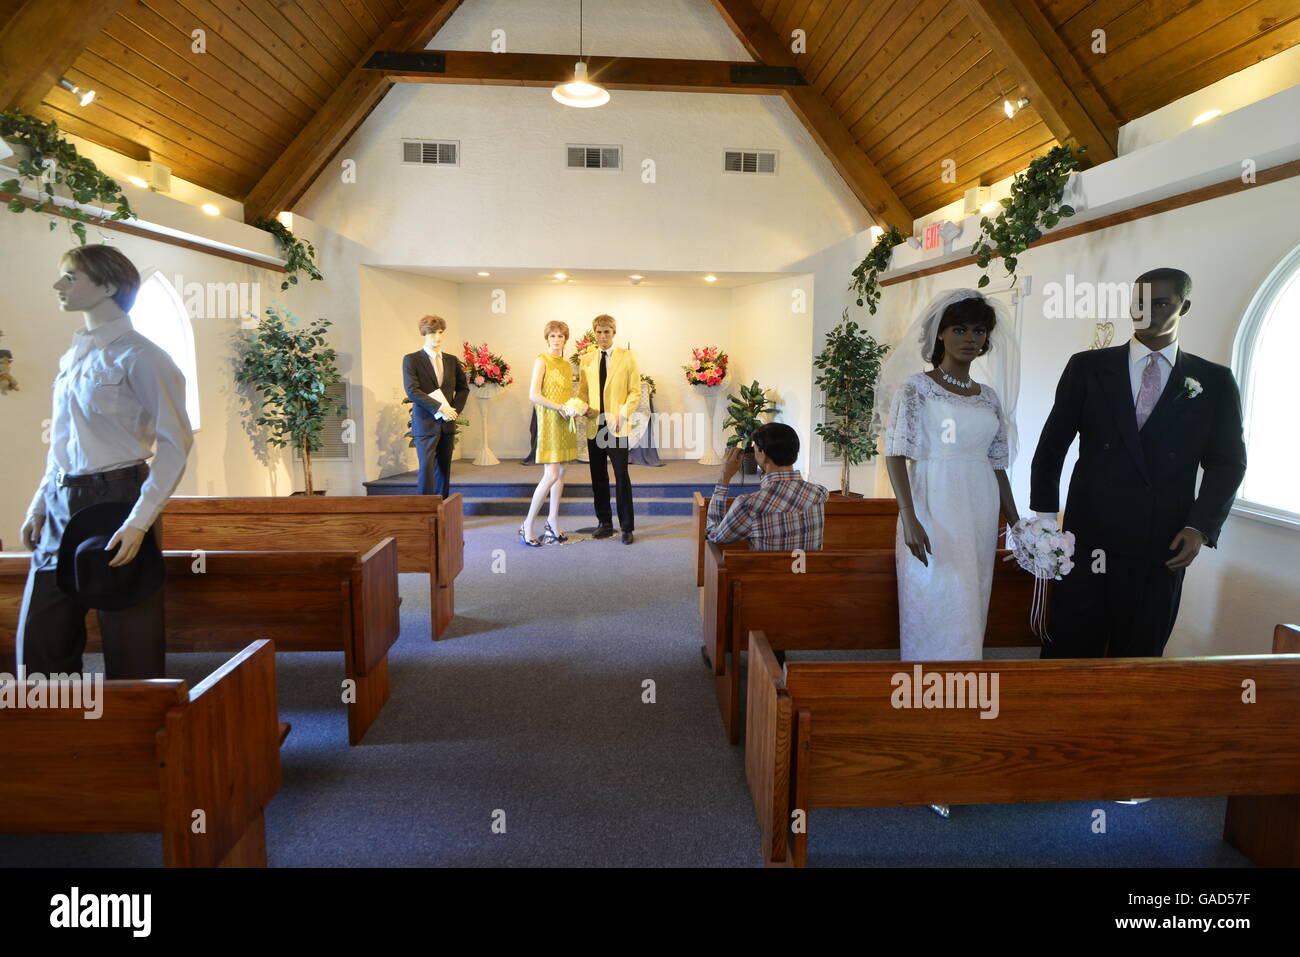 Las Vegas wedding church. Stock Photo